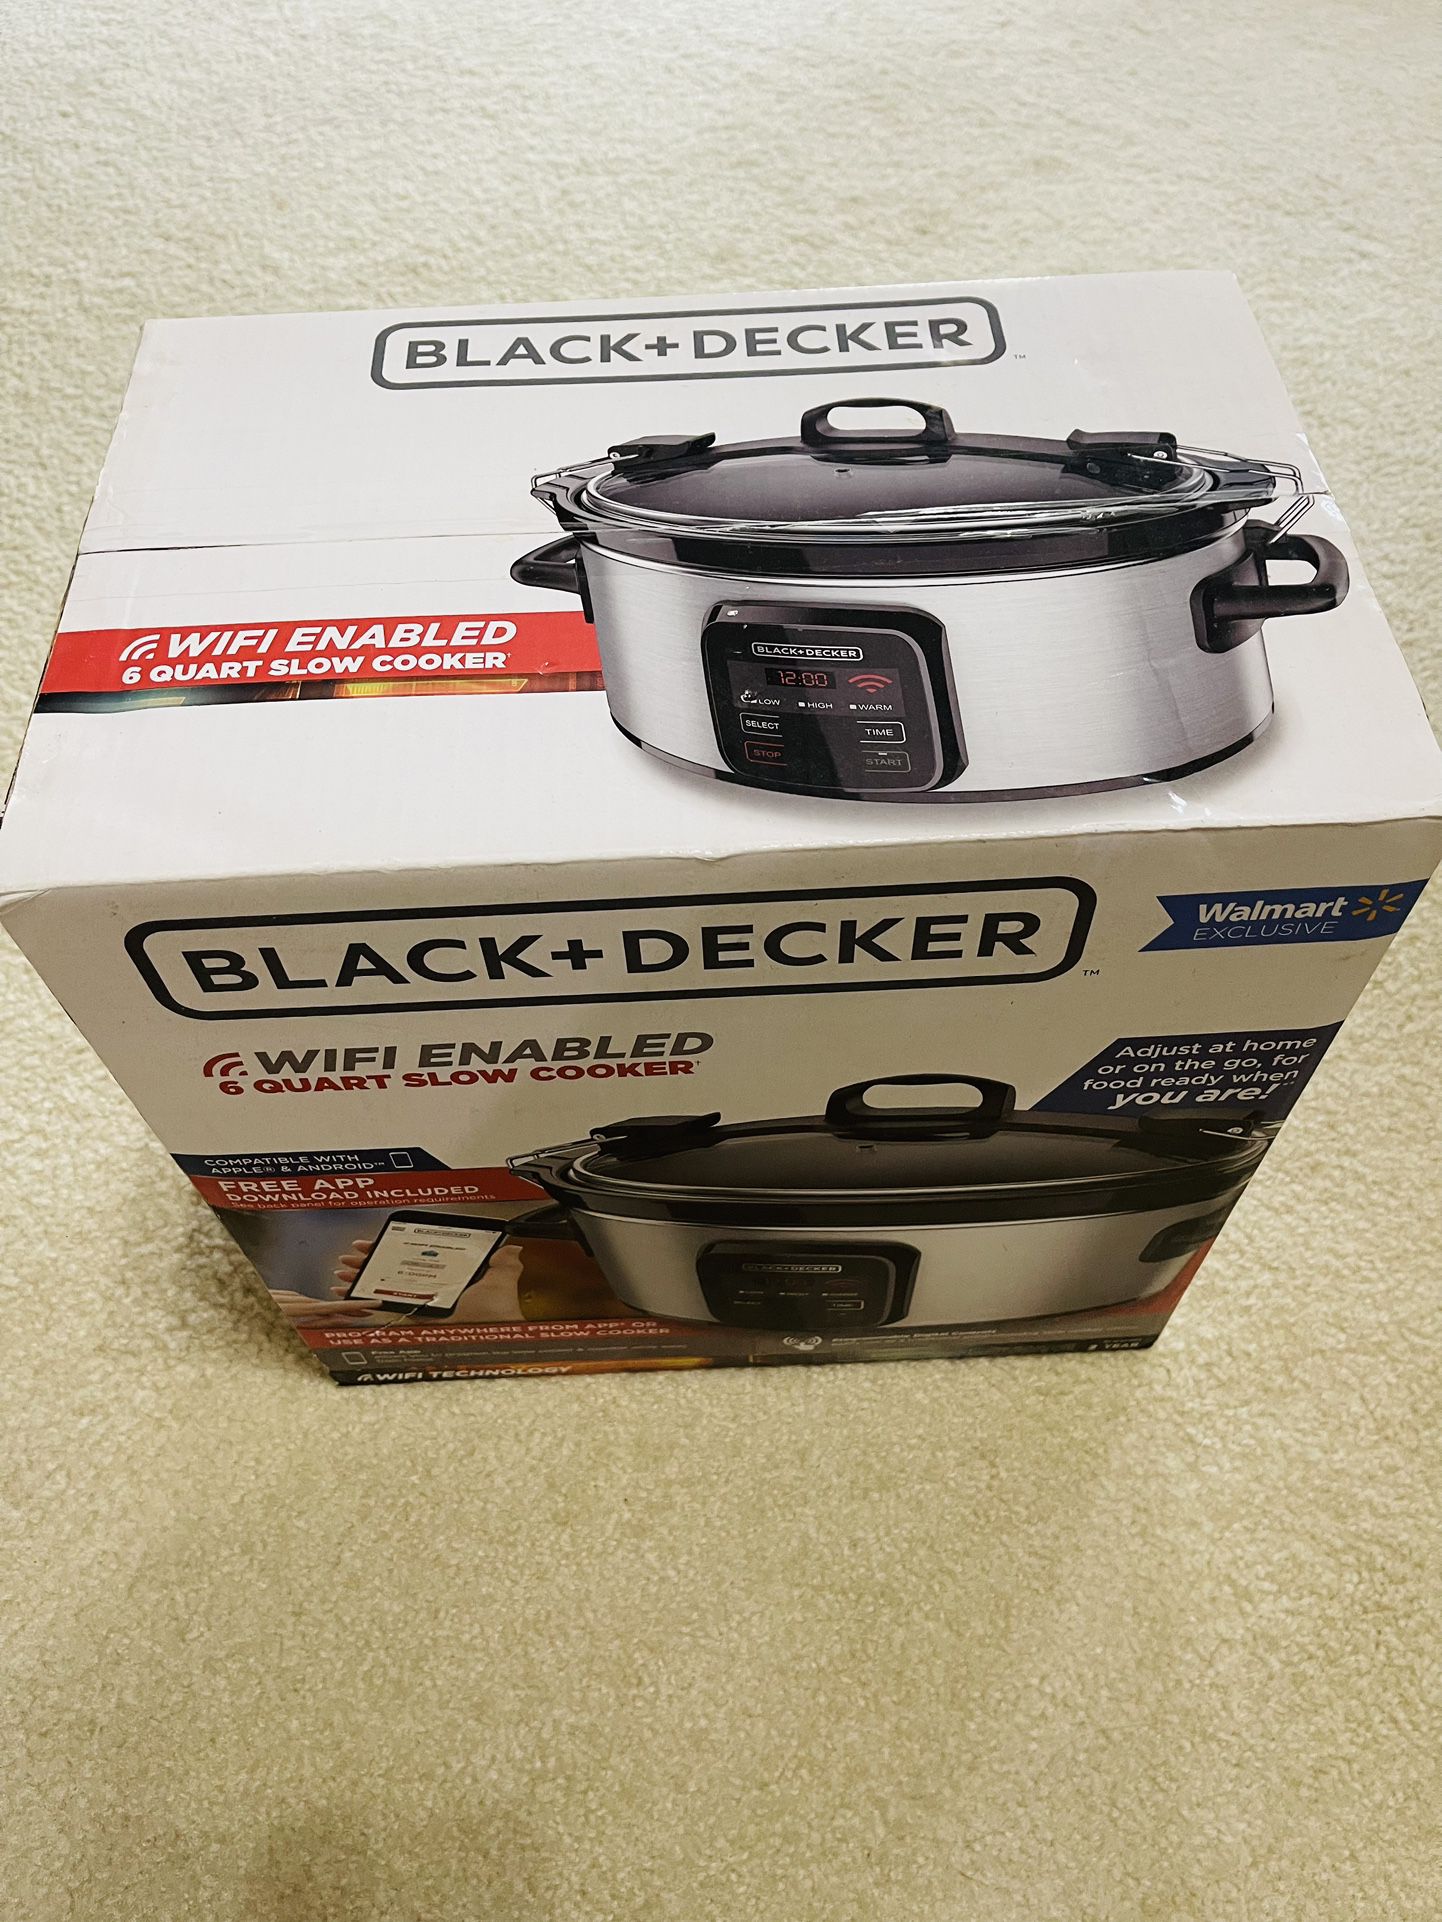 Brand New Black & Decker 6 Quart Slow Cooker